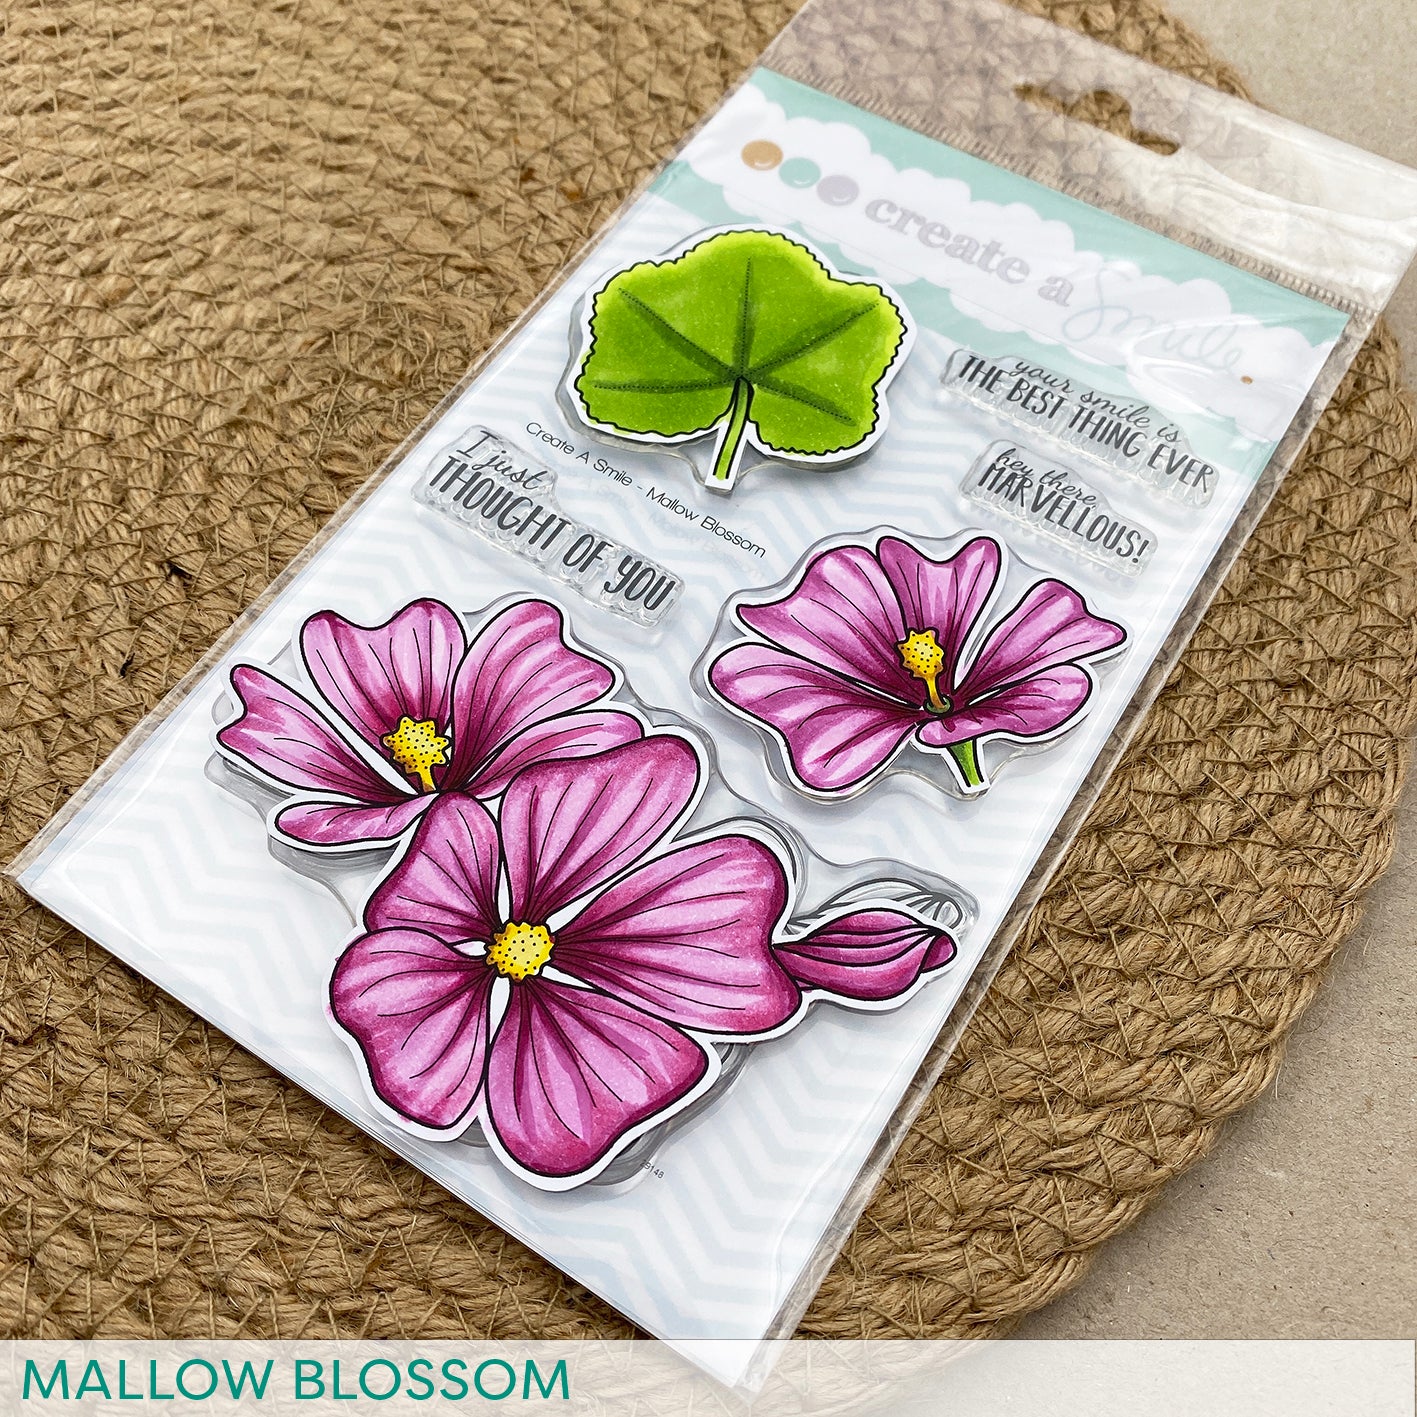 Create A Smile - Mallow Blossom - Crafty Meraki